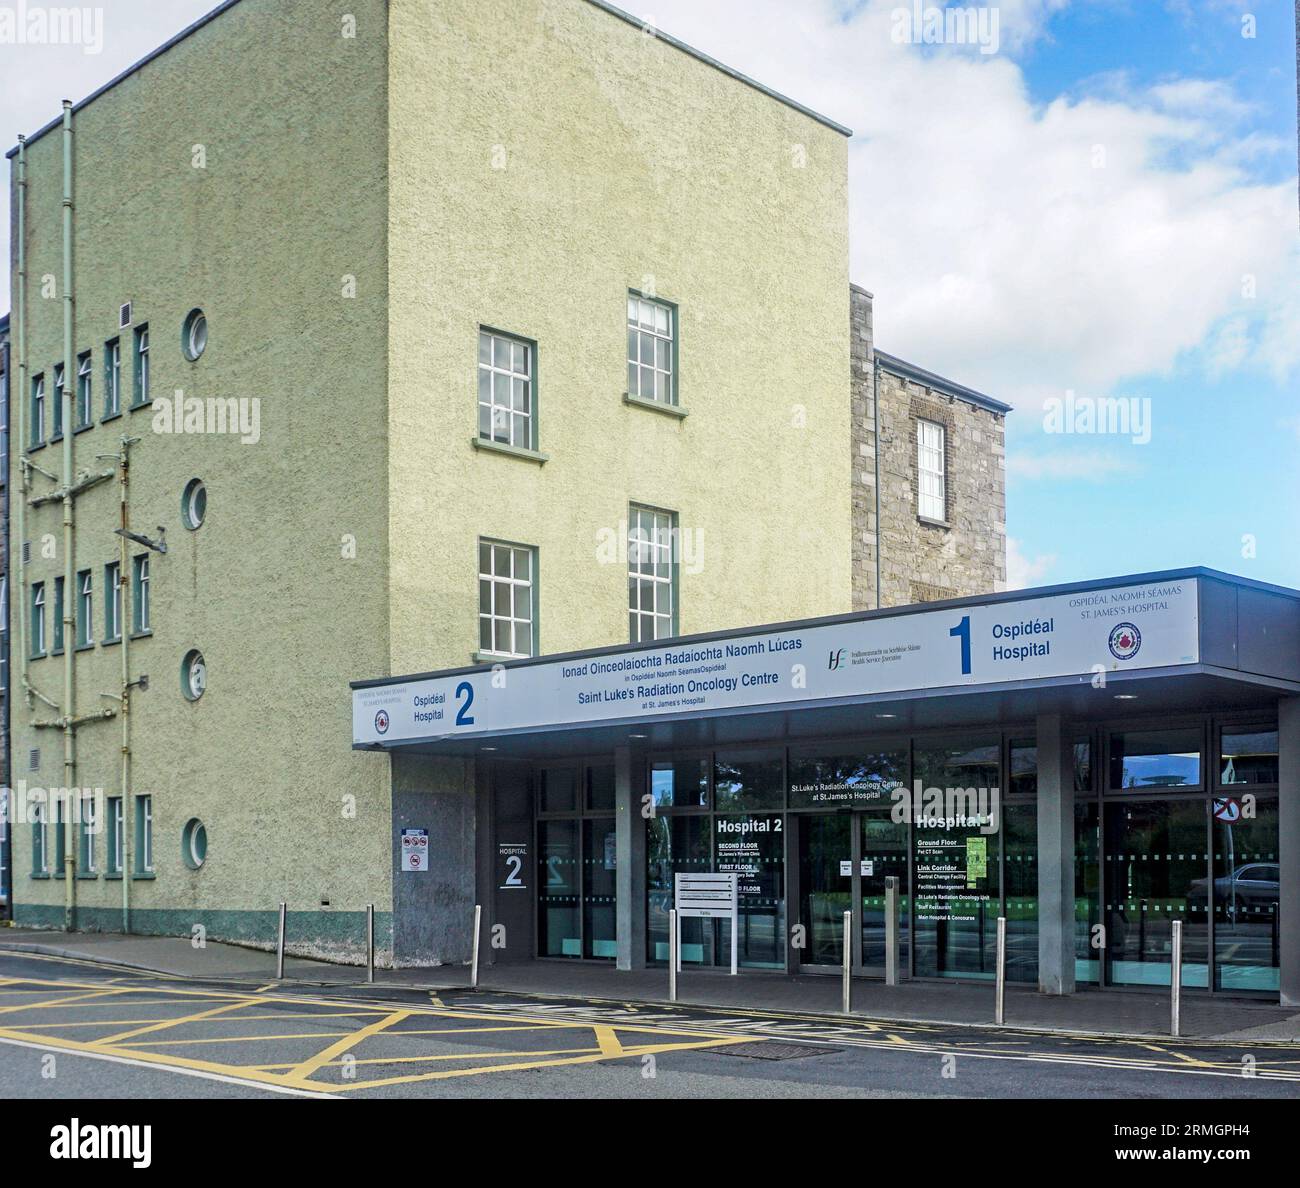 Saint Lukes Radiation Oncology Centre, Teil des St James Hospital Campus in Dublin, Irland. Stockfoto